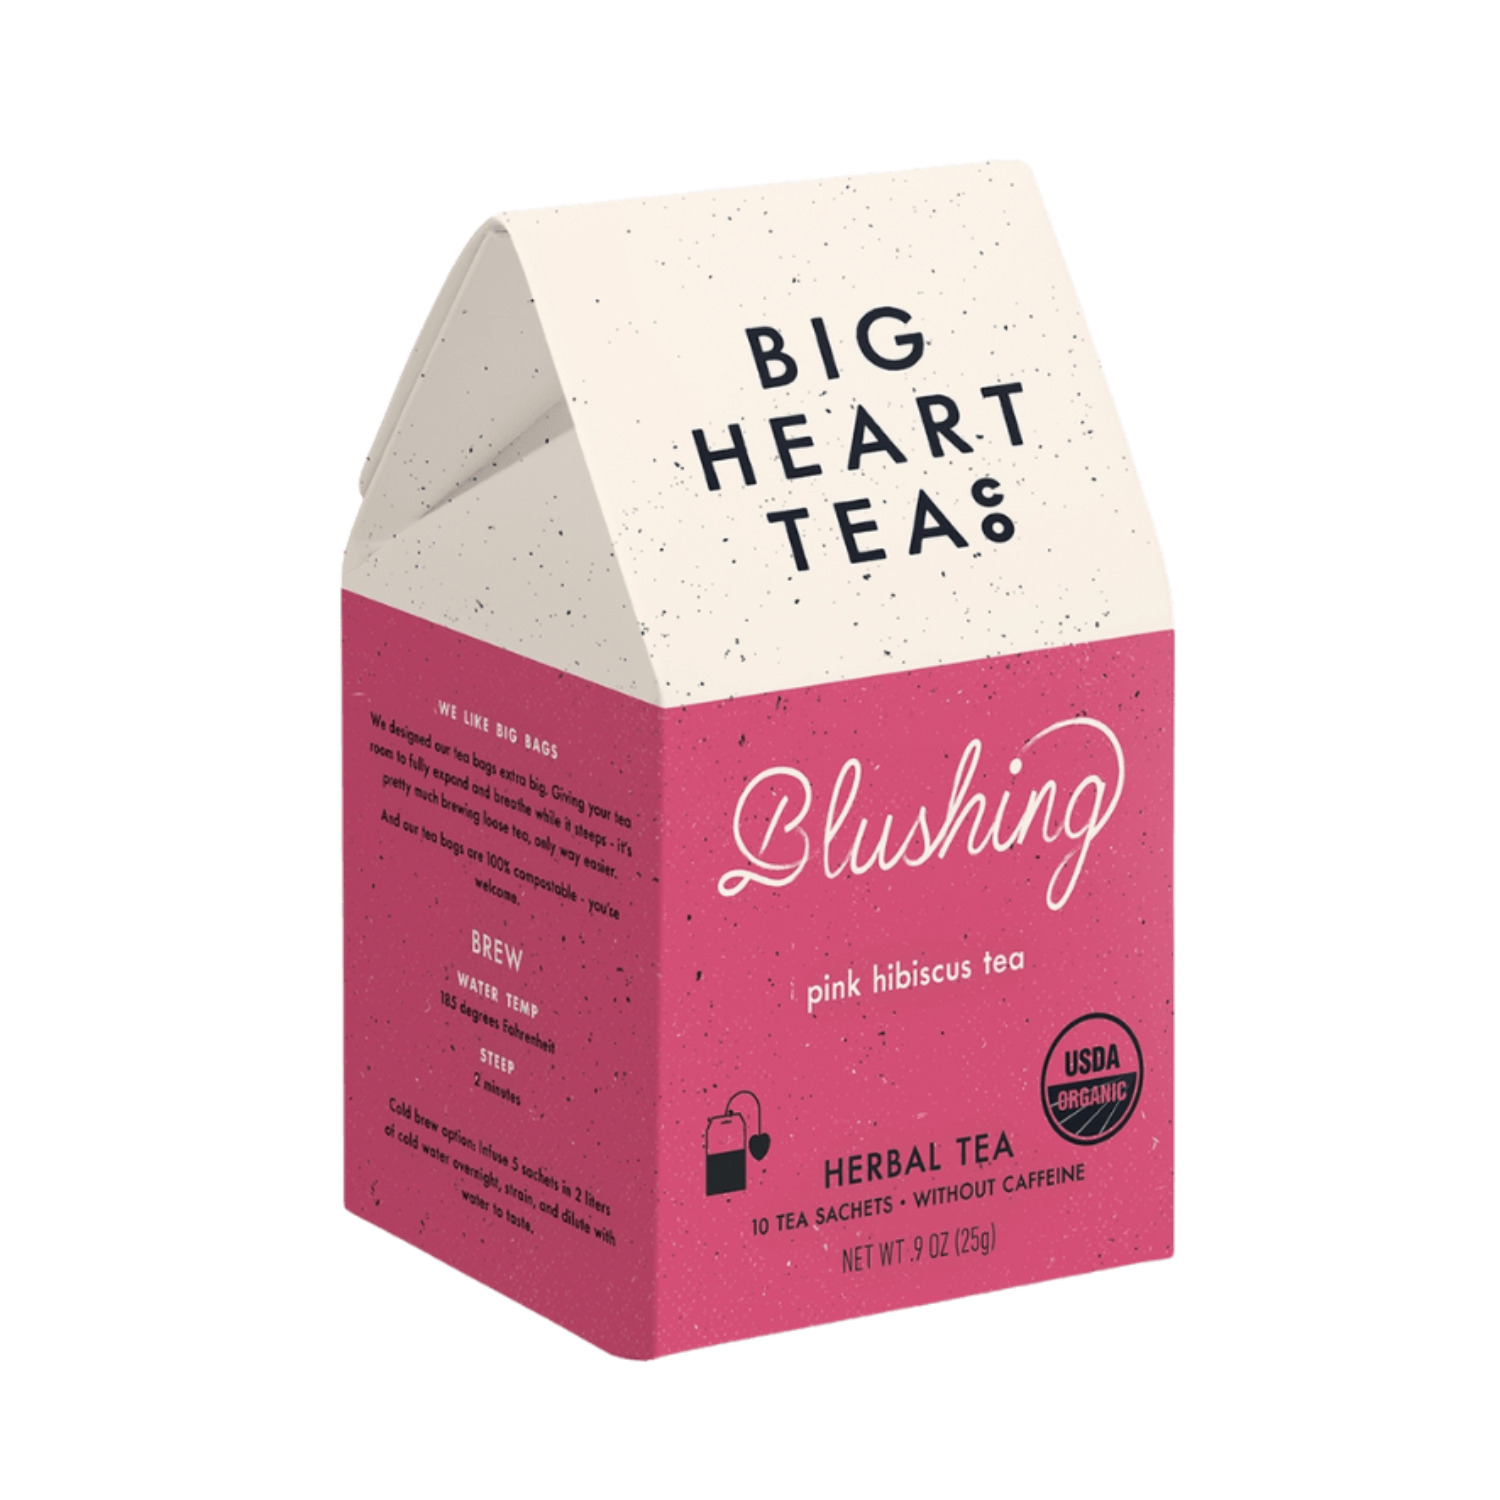 Blushing Hibiscus Tea By Big Heart Tea Co